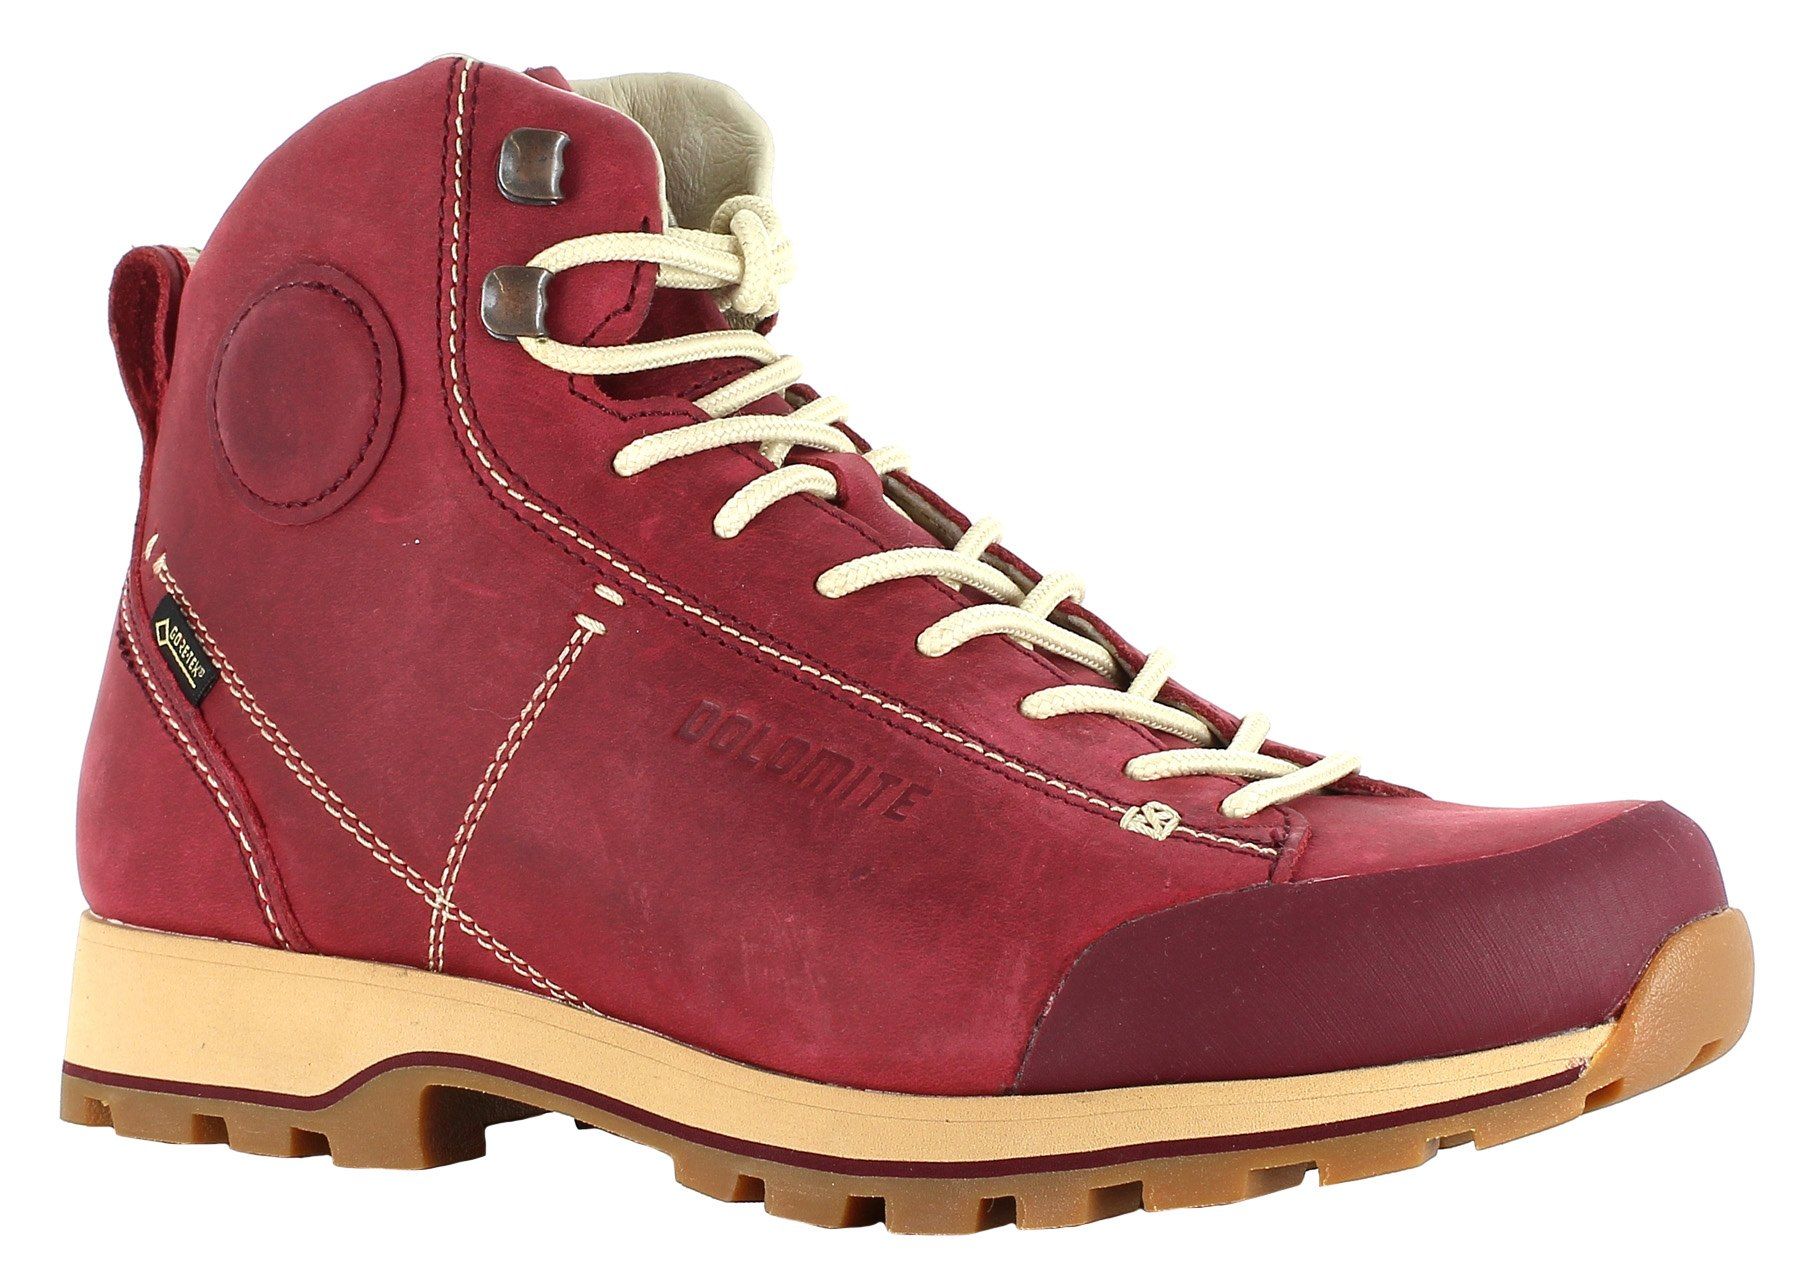 Ботинки Dolomite Cinquantaquattro High FG GTX, burgundy red, 4 UK